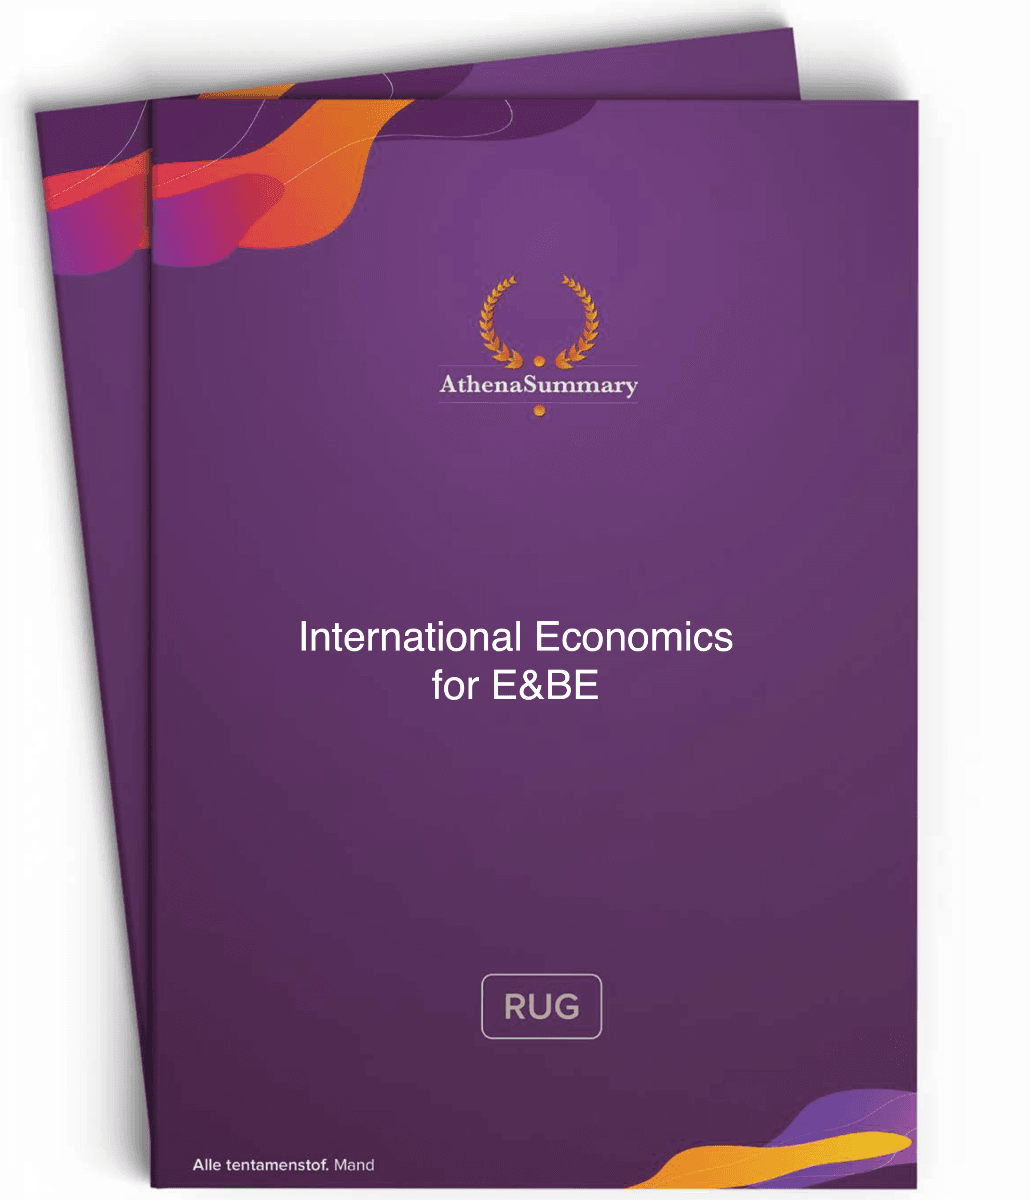 Literature Summary - International Economics for E&BE